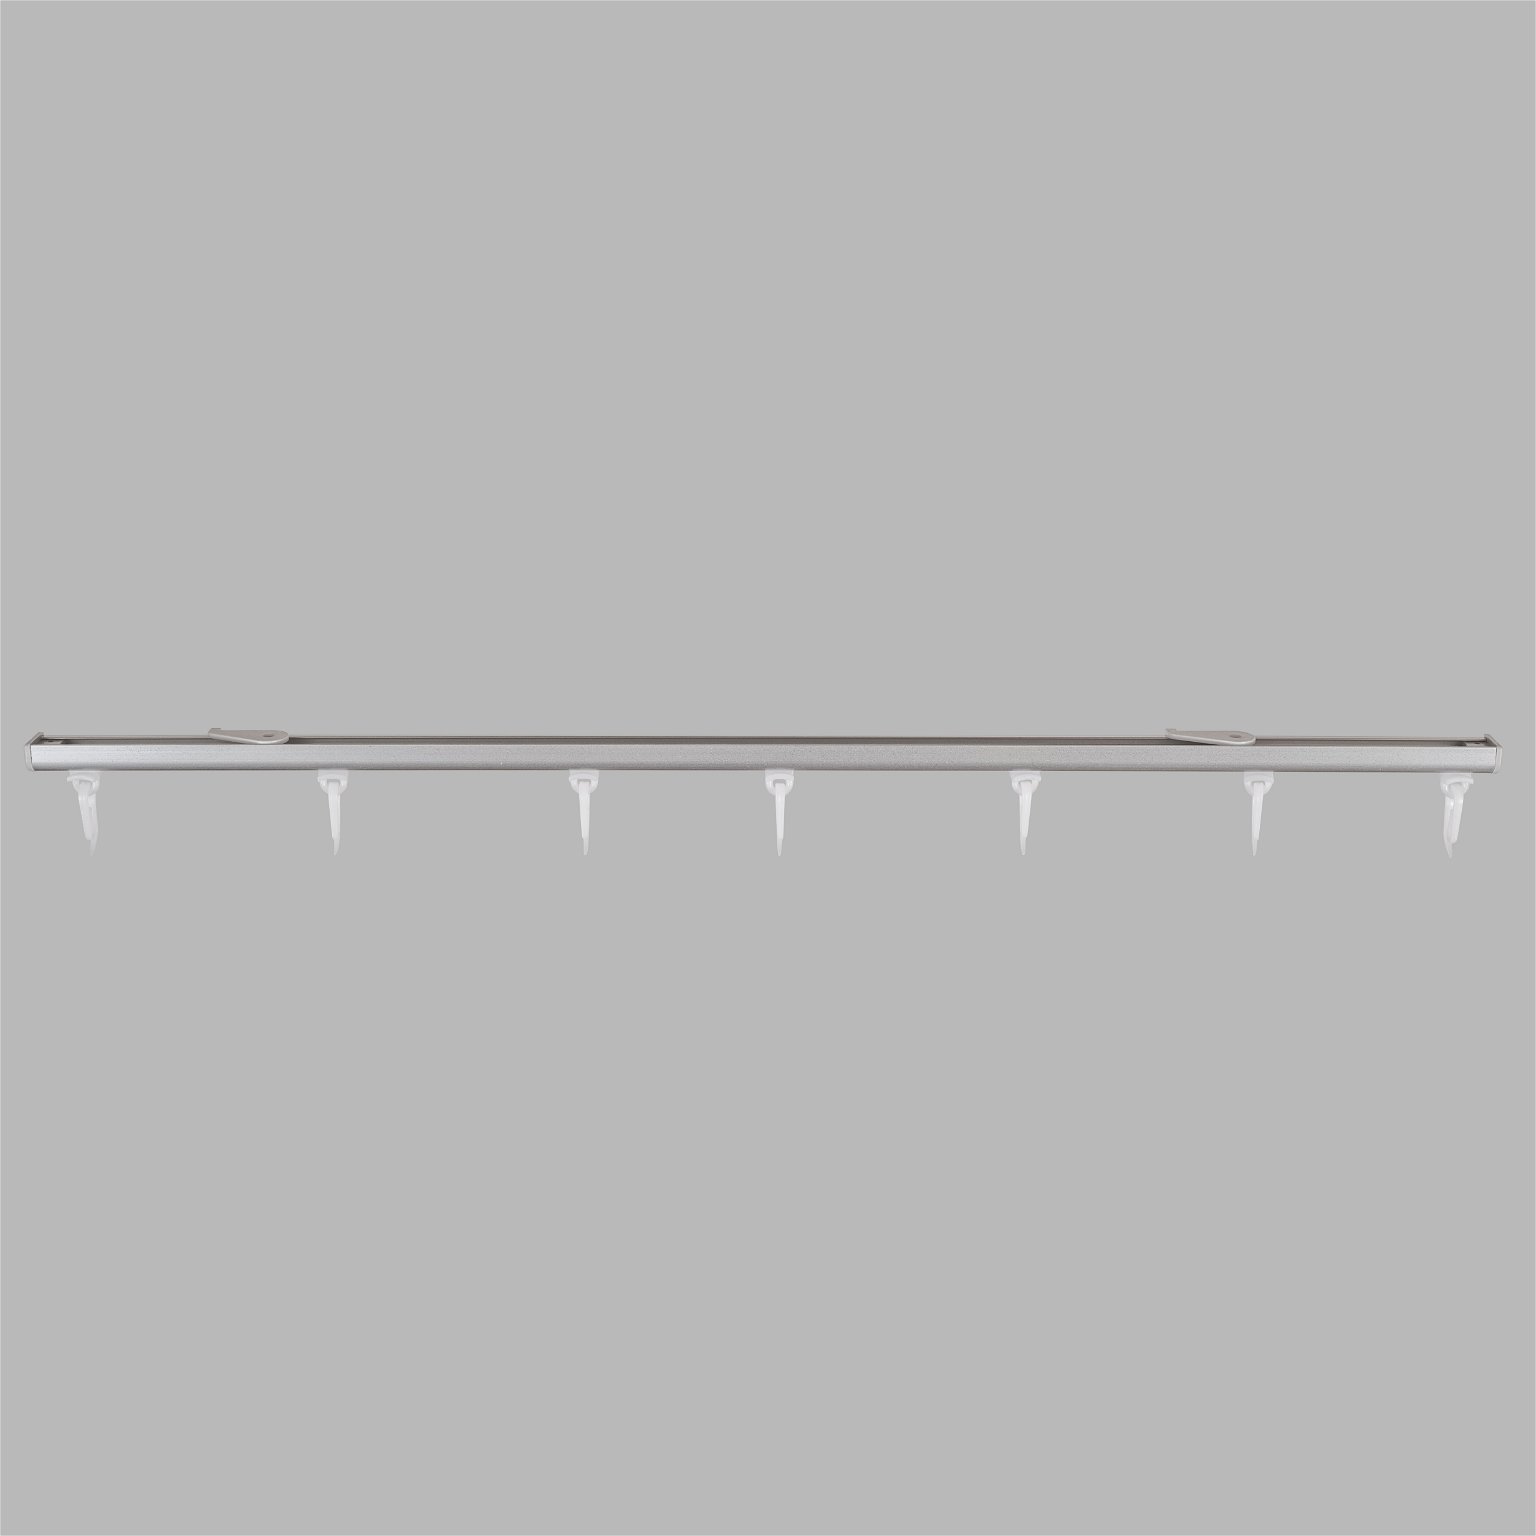 Aliuminio profilis D, matinio chromo sp., 250 cm, sukomplektuotas